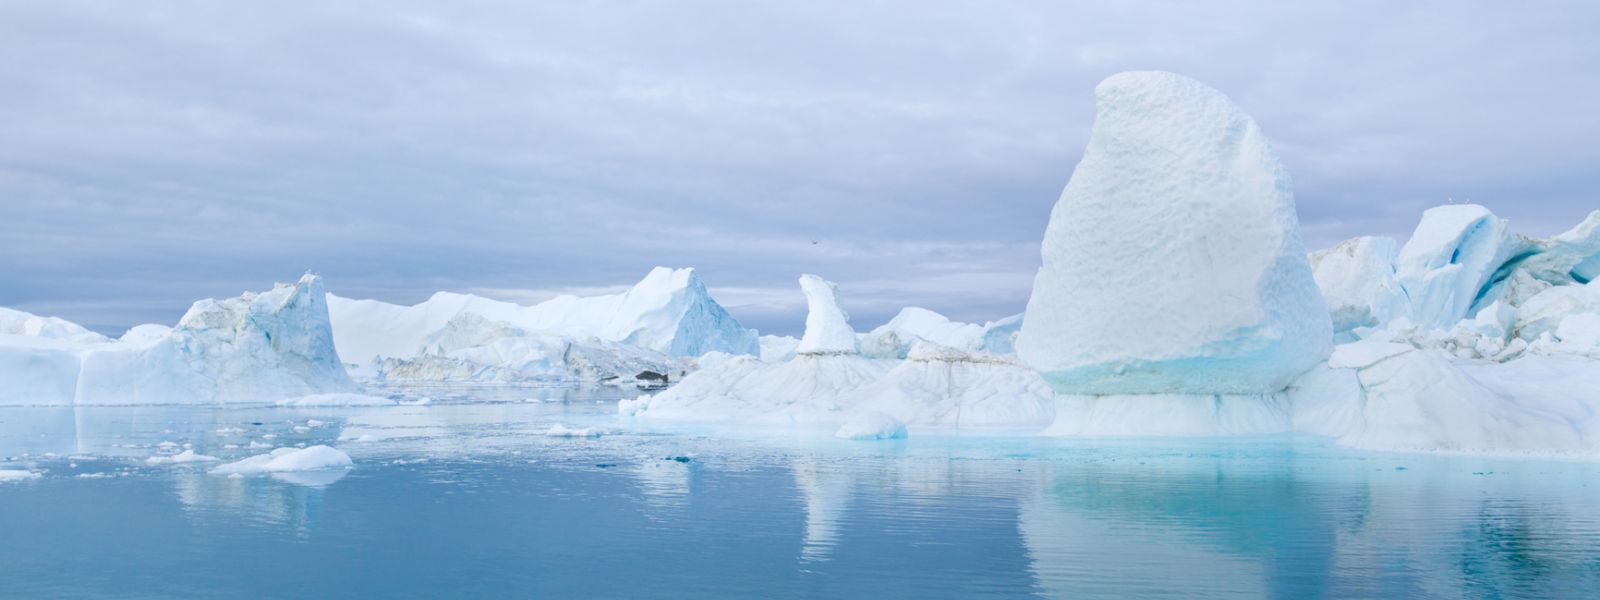 Ice bergs in the Arctic Sea.